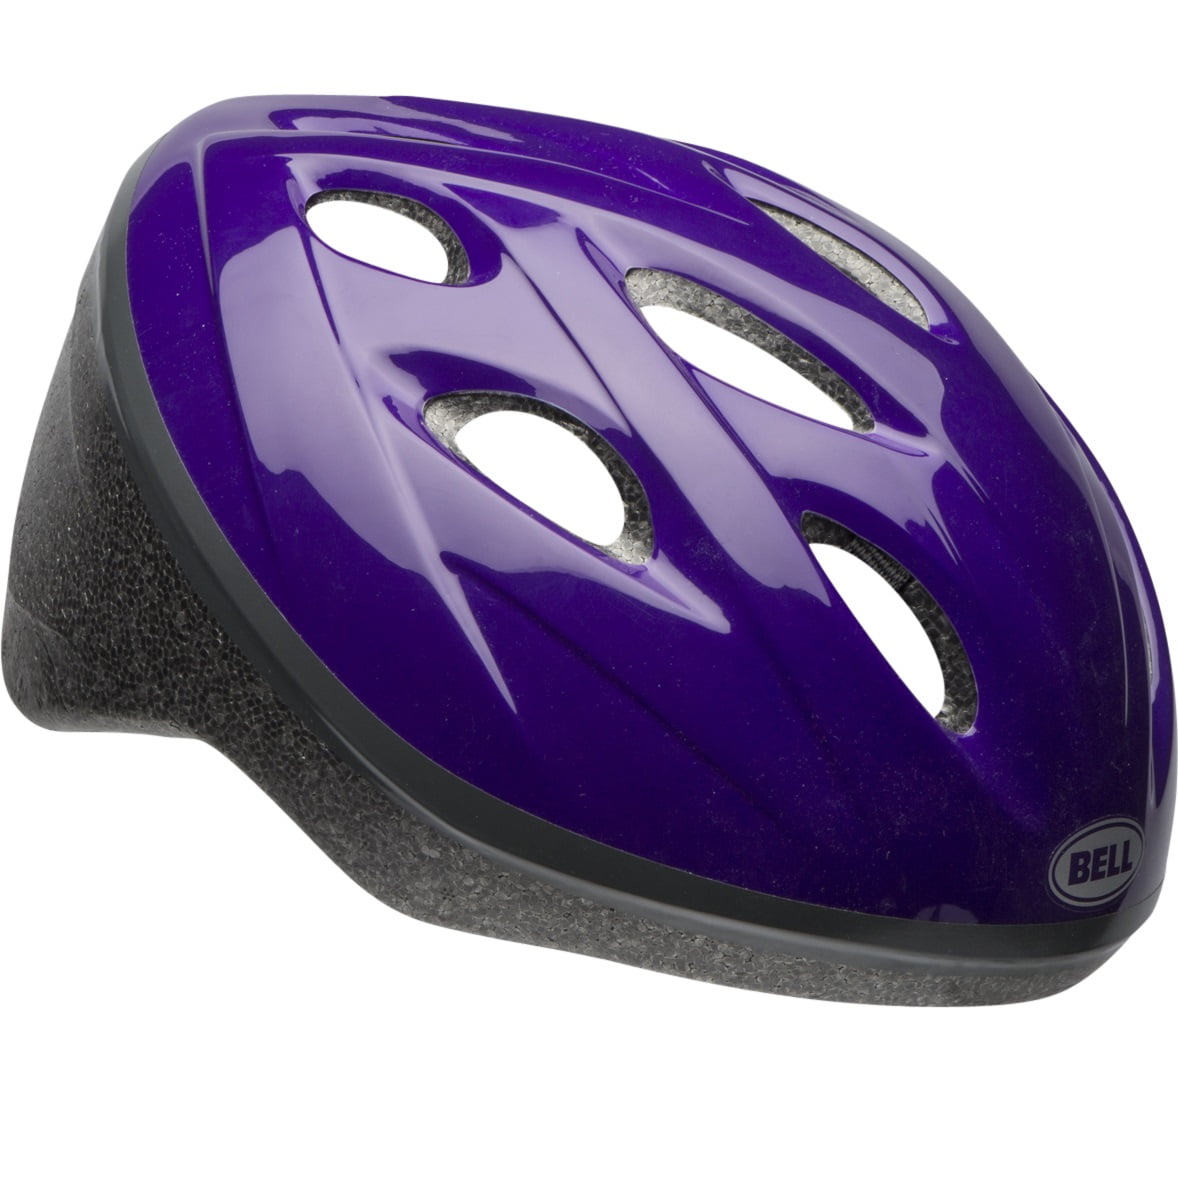 Schwinn Thrasher Youth Helmet, Ages 8 to 13, Purple / White 